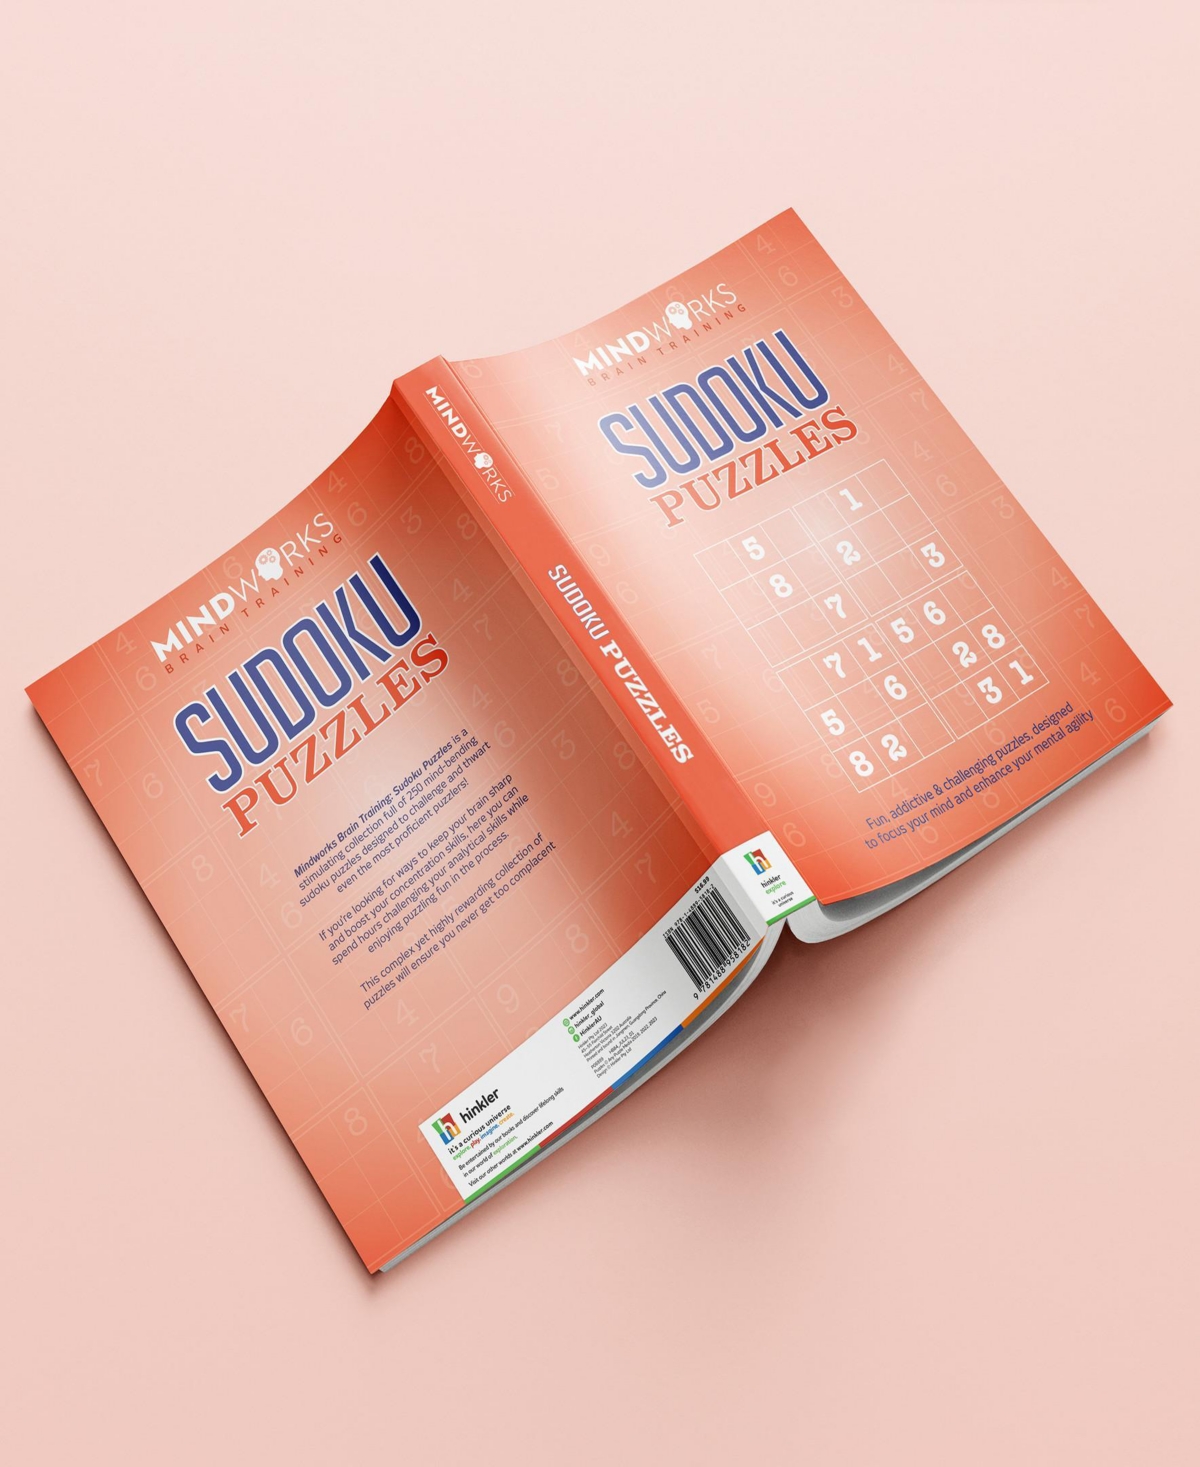 Shop Mindworks - Sudoku Puzzles Puzzle Book In Multi